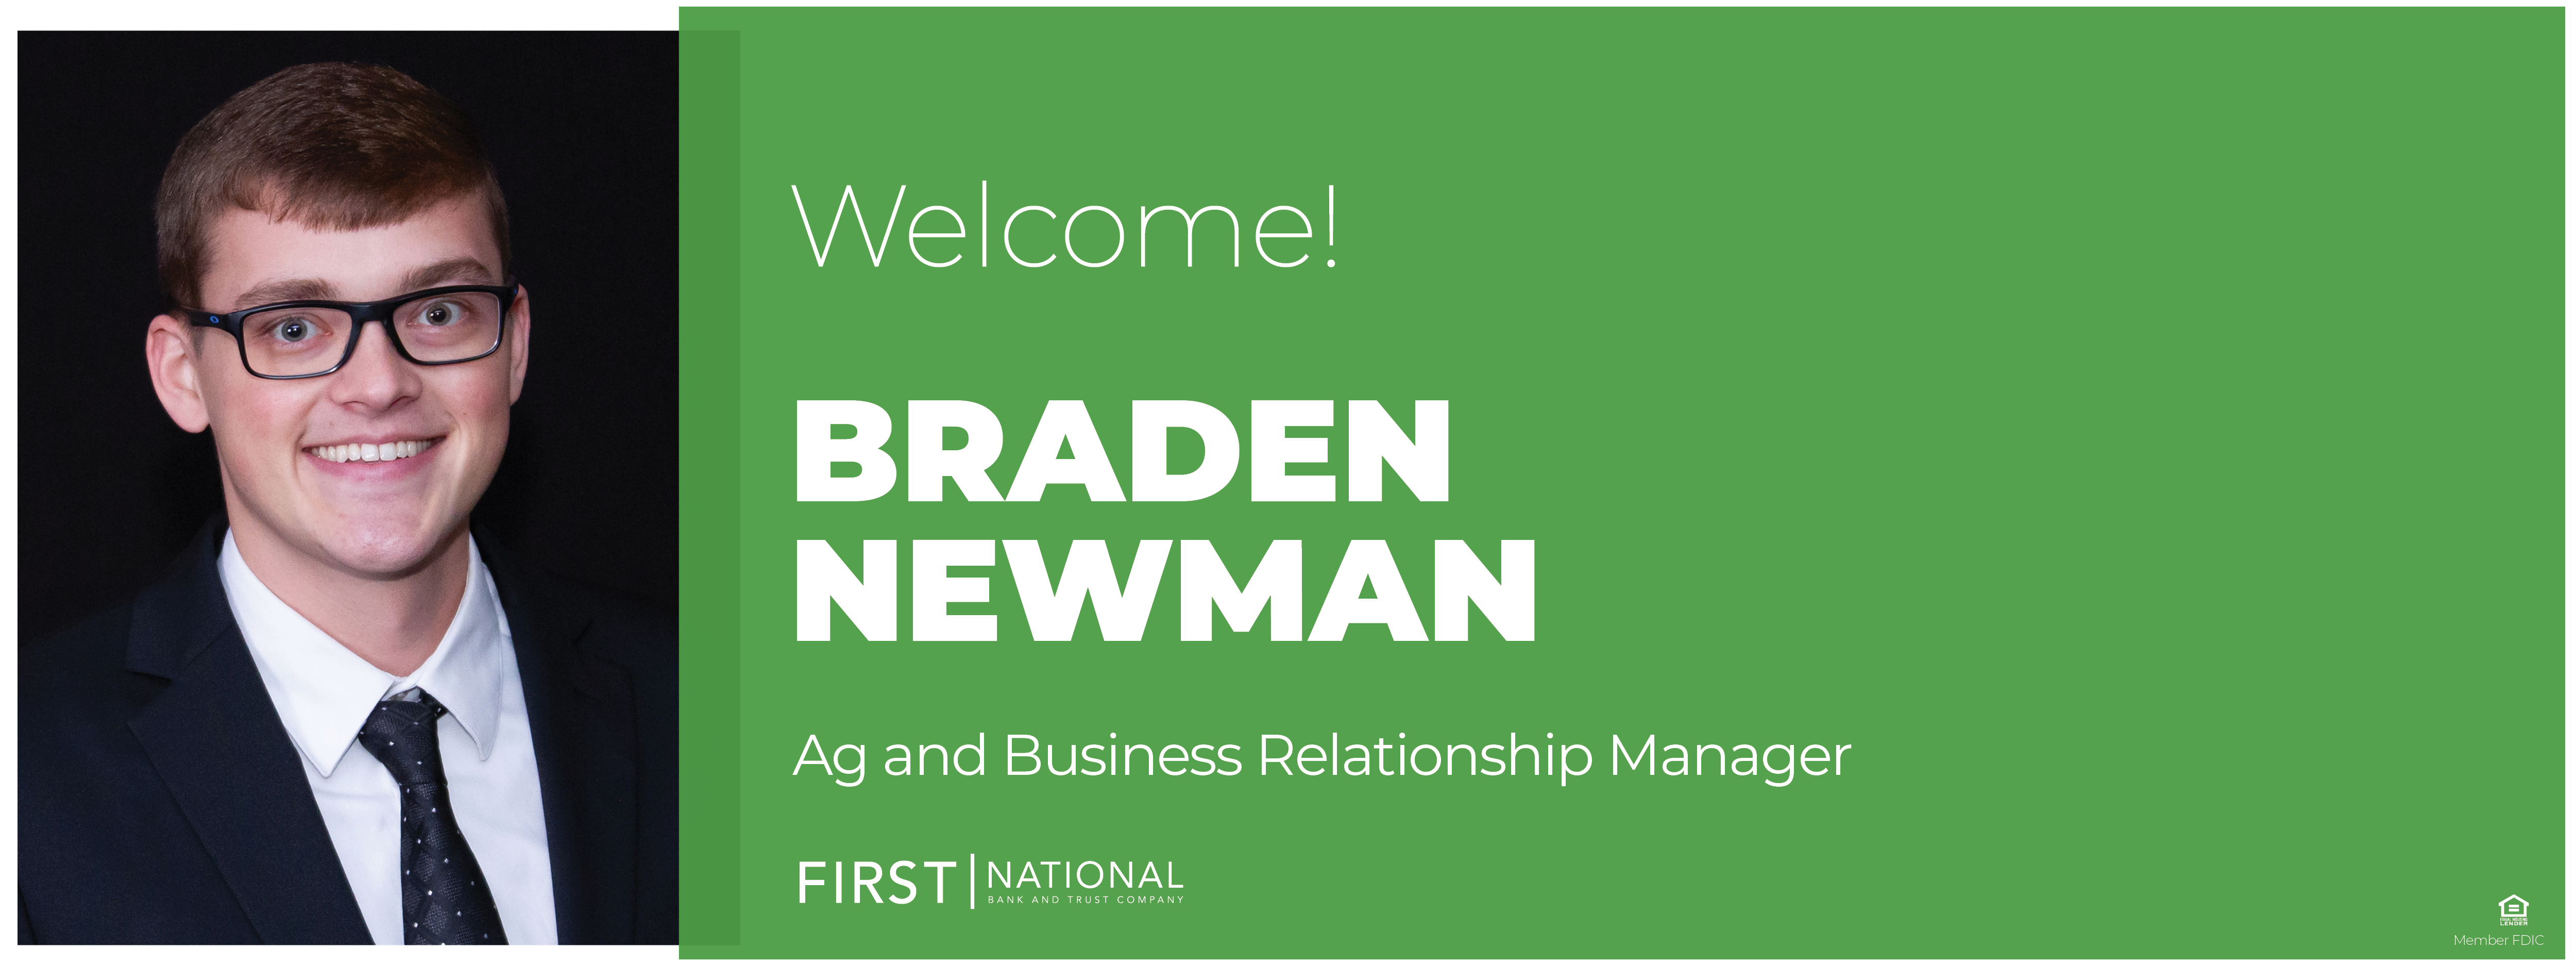 Braden Newman Welcome image